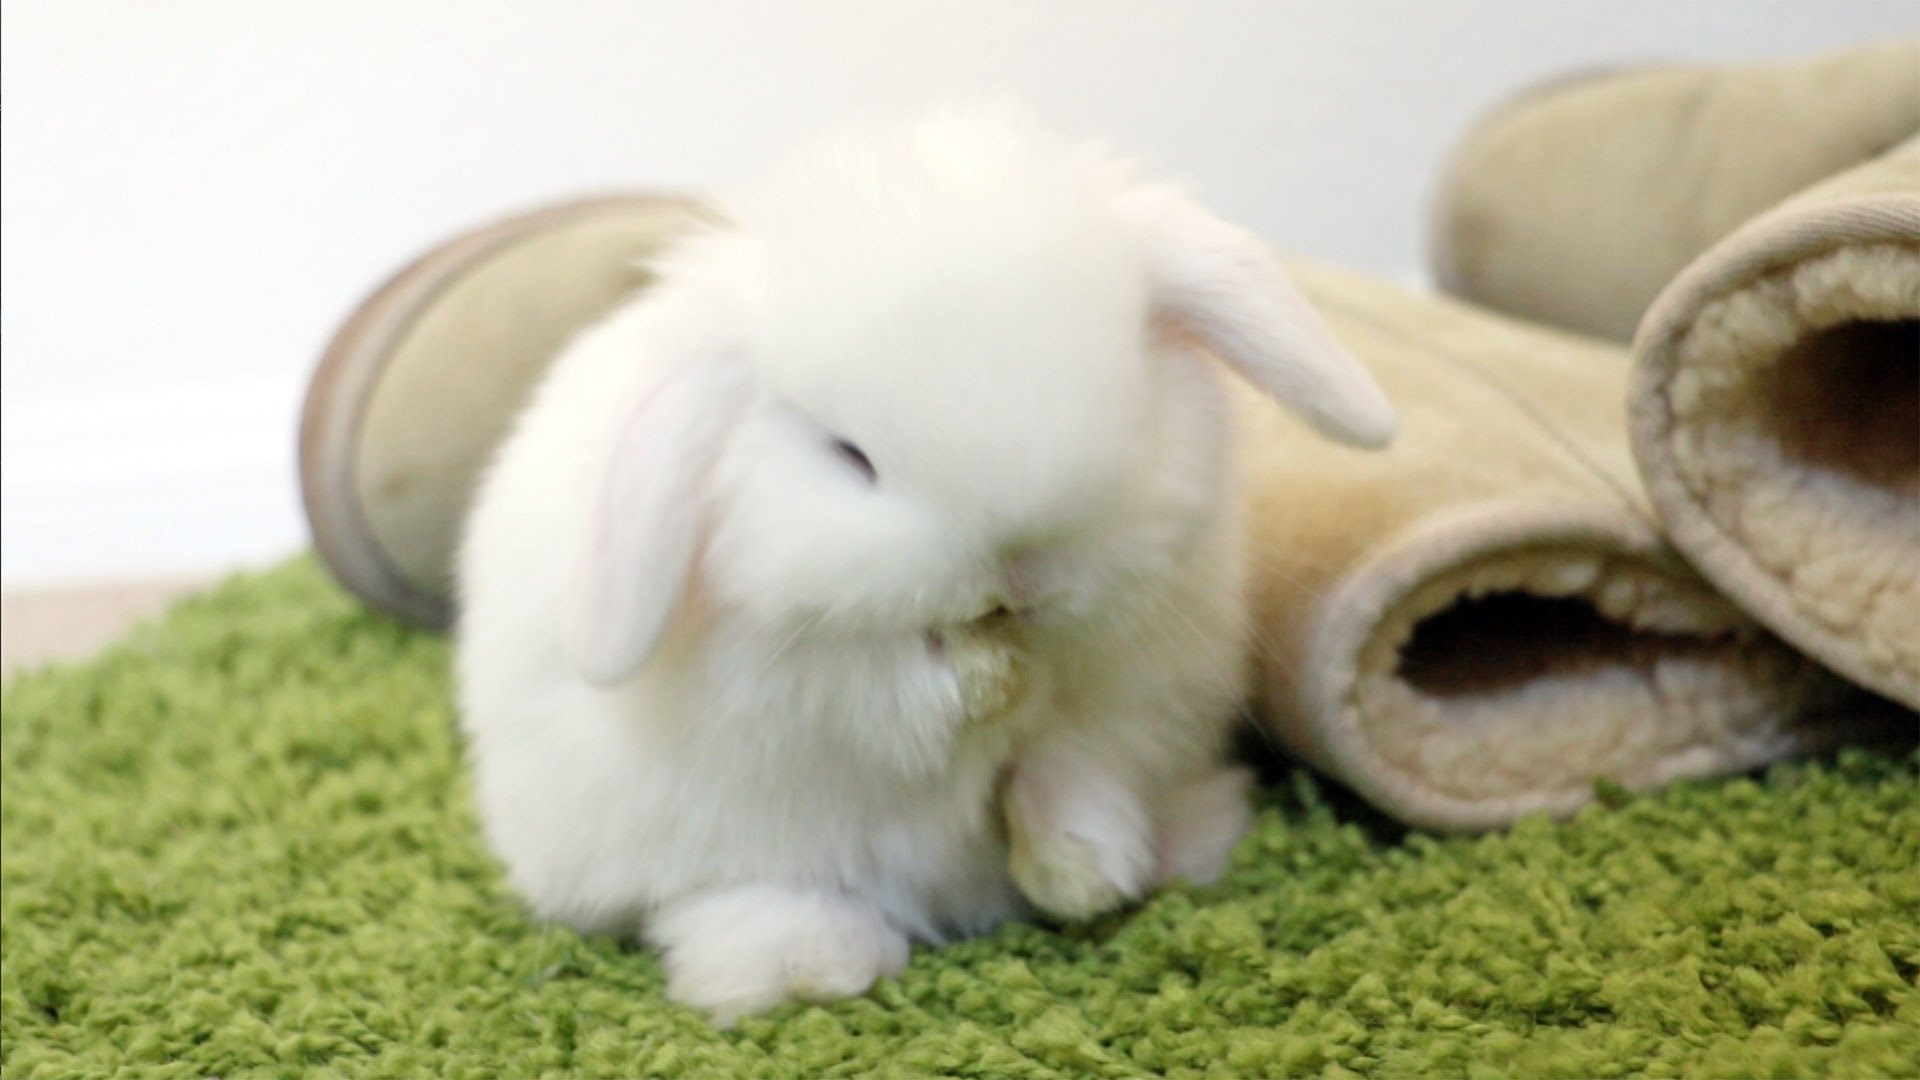 Baby Bunny Grooming - So CUTE! - YouTube